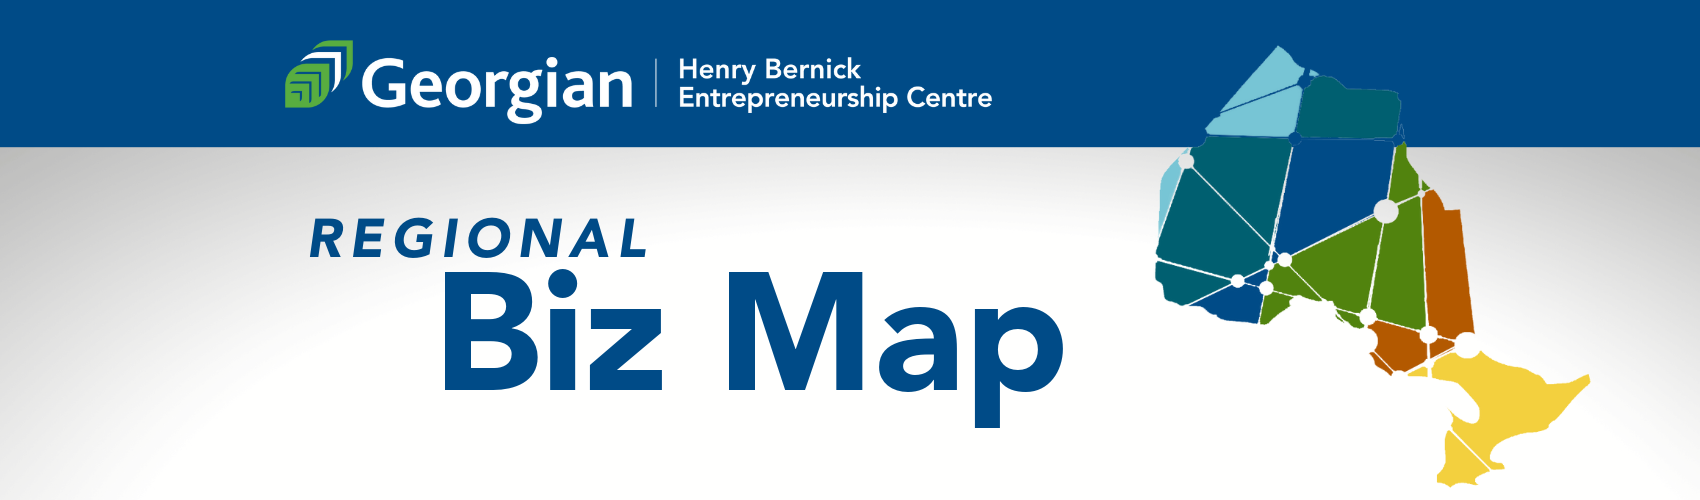 Georgian College: Henry Bernick Entrepreneurship Centre - Regional Biz Map